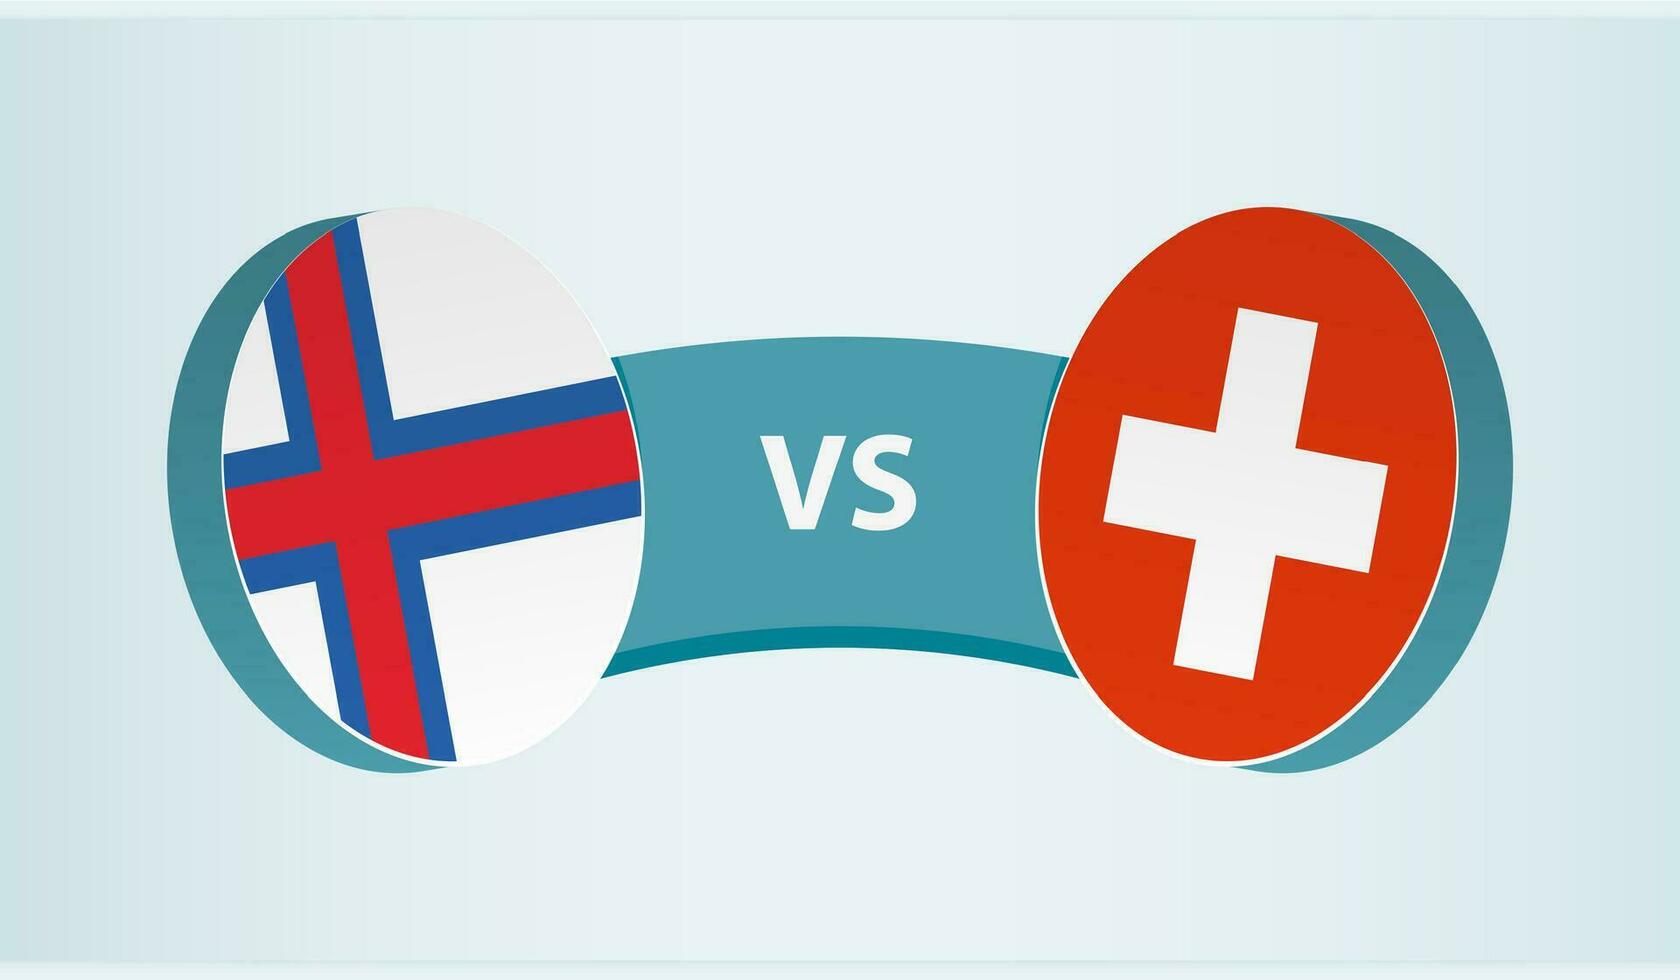 Faroe Islands versus Switzerland, team sports competition concept. vector